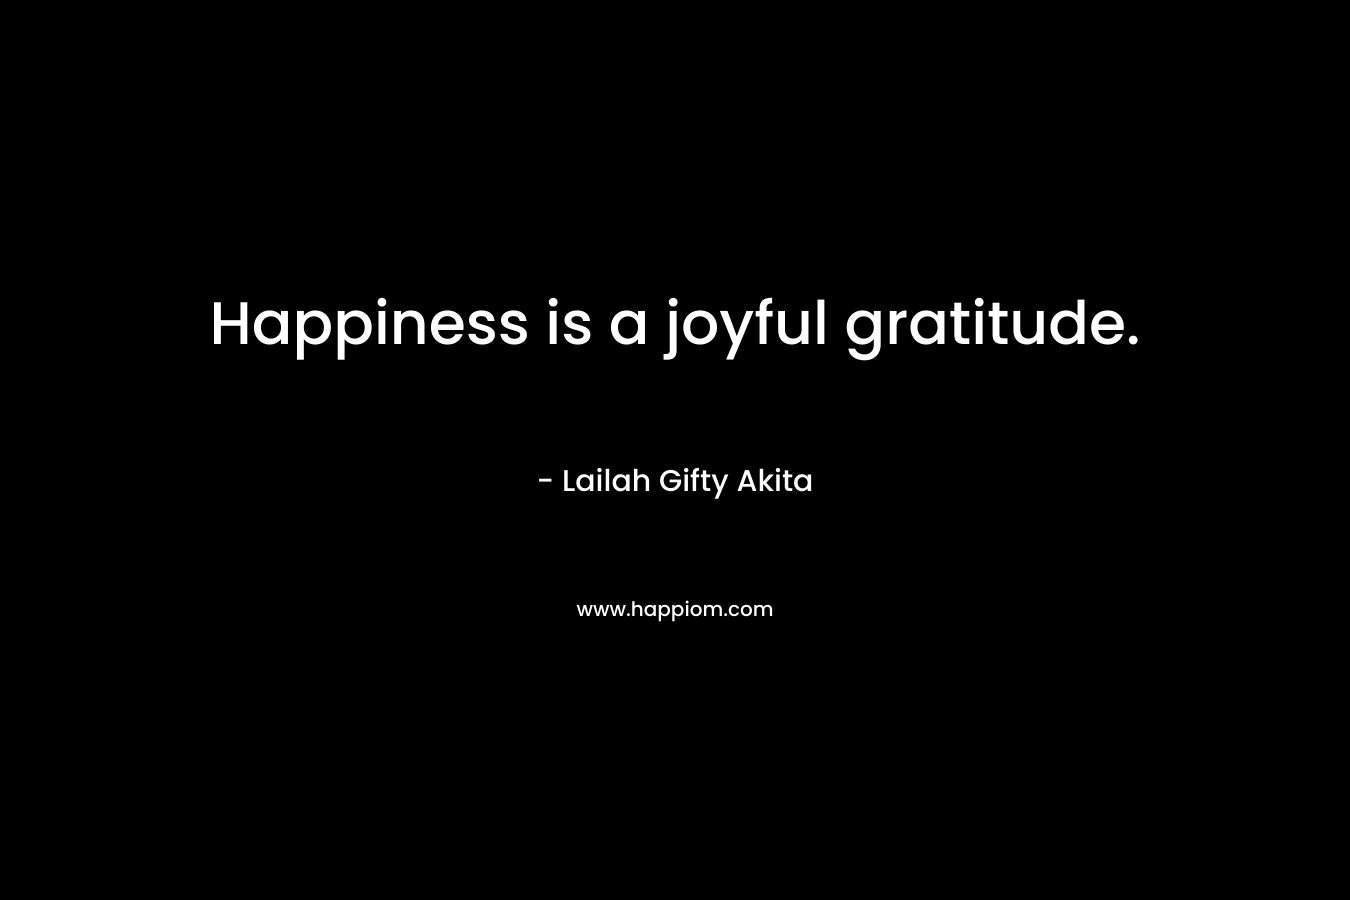 Happiness is a joyful gratitude.